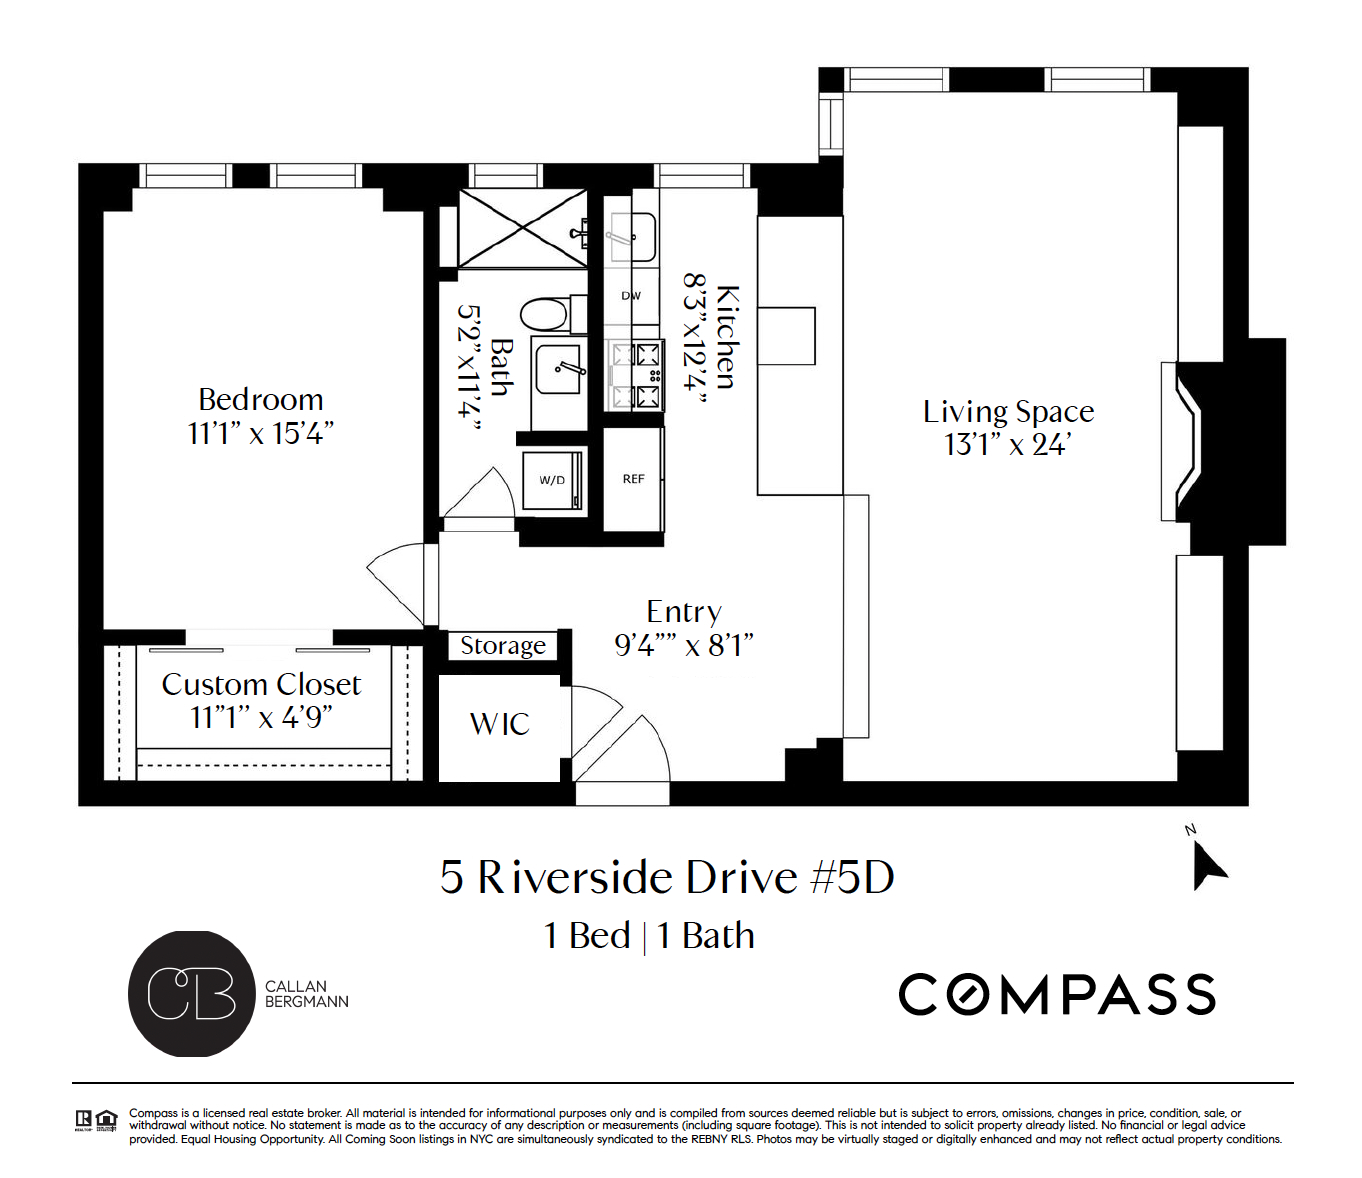 Floorplan for 5 Riverside Drive, 5D